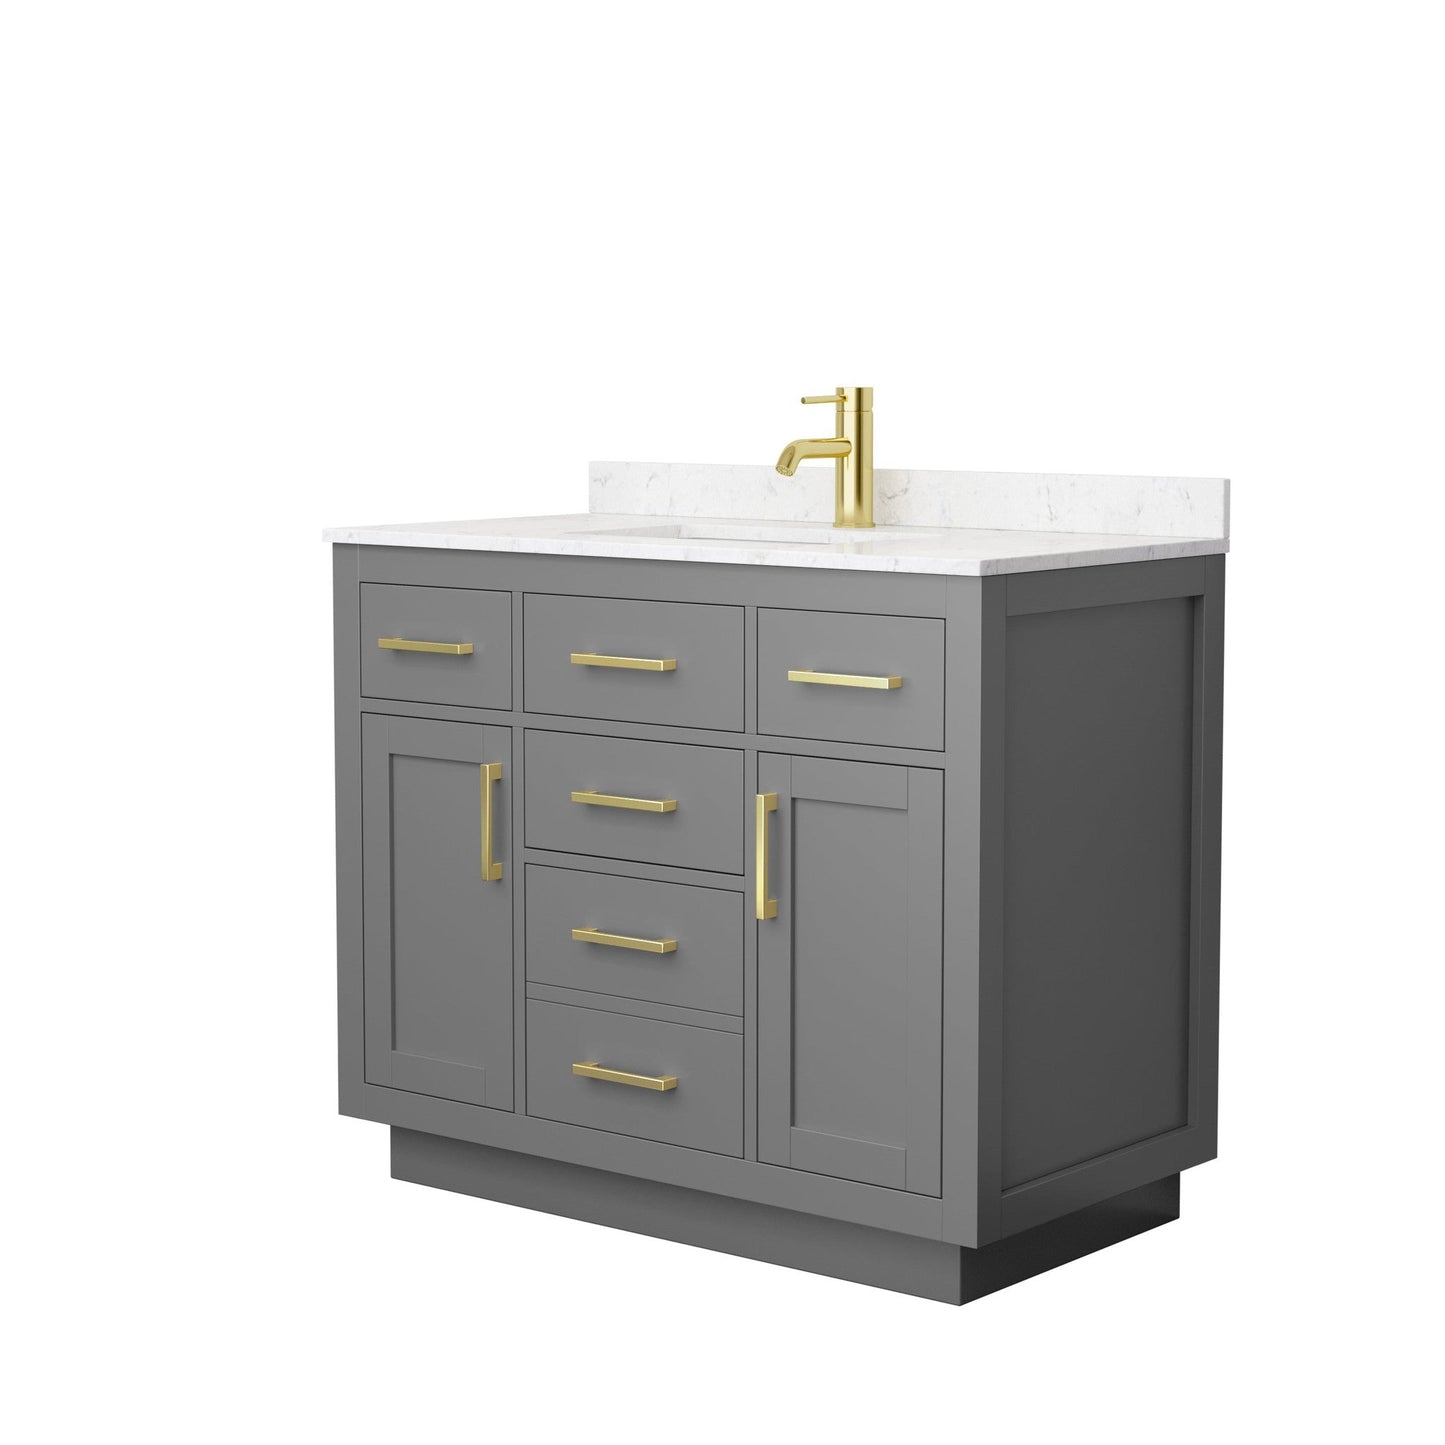 Beckett 42" Single Bathroom Vanity With Toe Kick in Dark Gray, Carrara Cultured Marble Countertop, Undermount Square Sink, Brushed Gold Trim